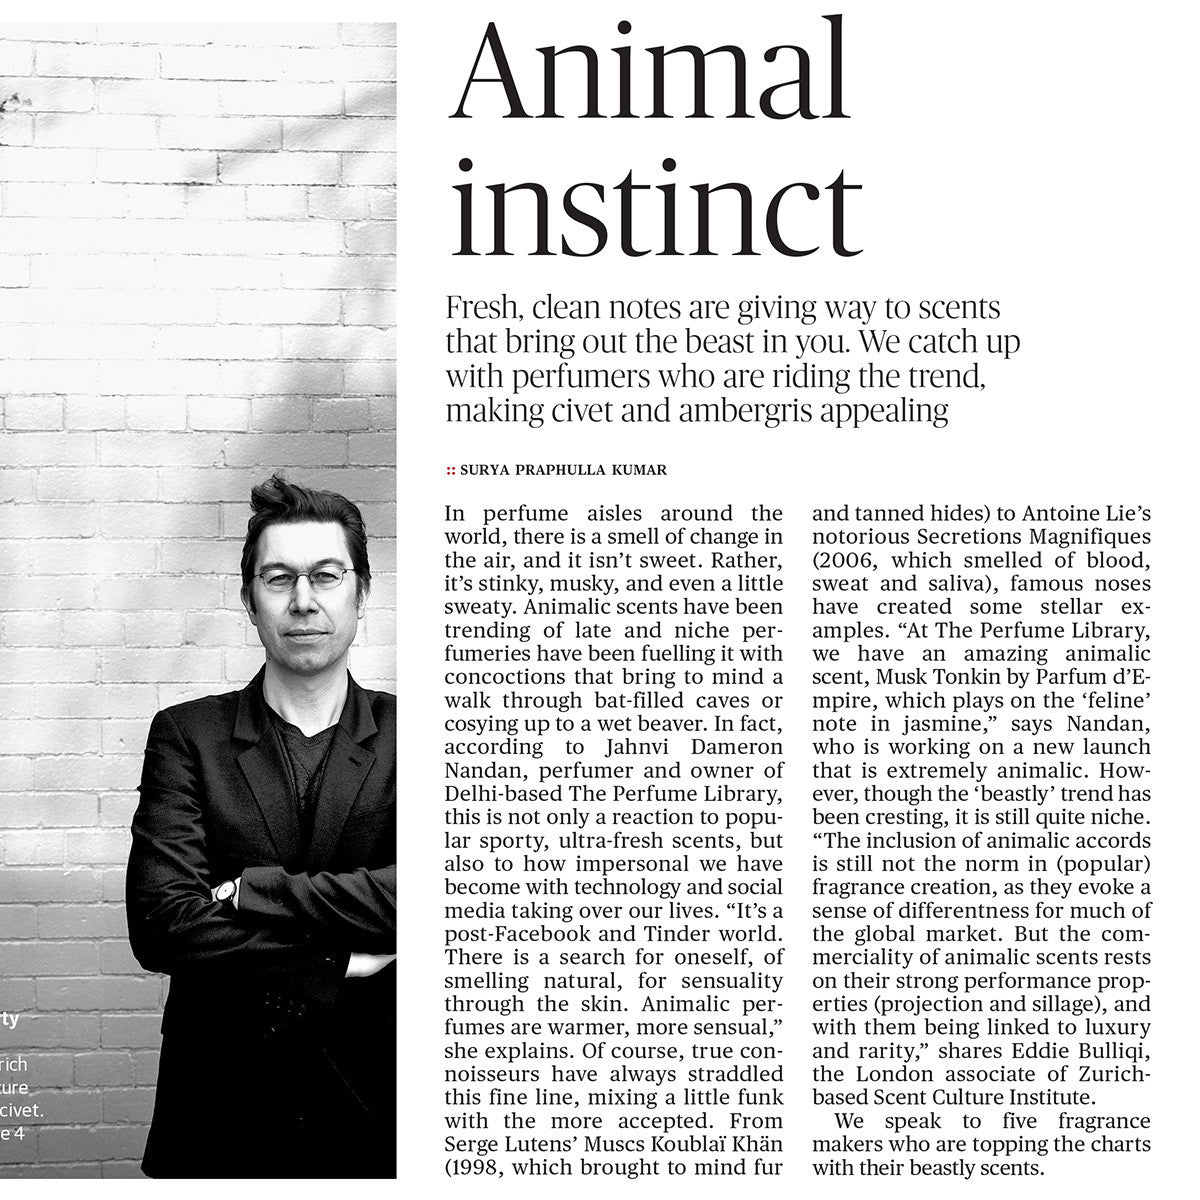 Print Press: The Hindu, April 8th,  2017 – "Animal Instinct"